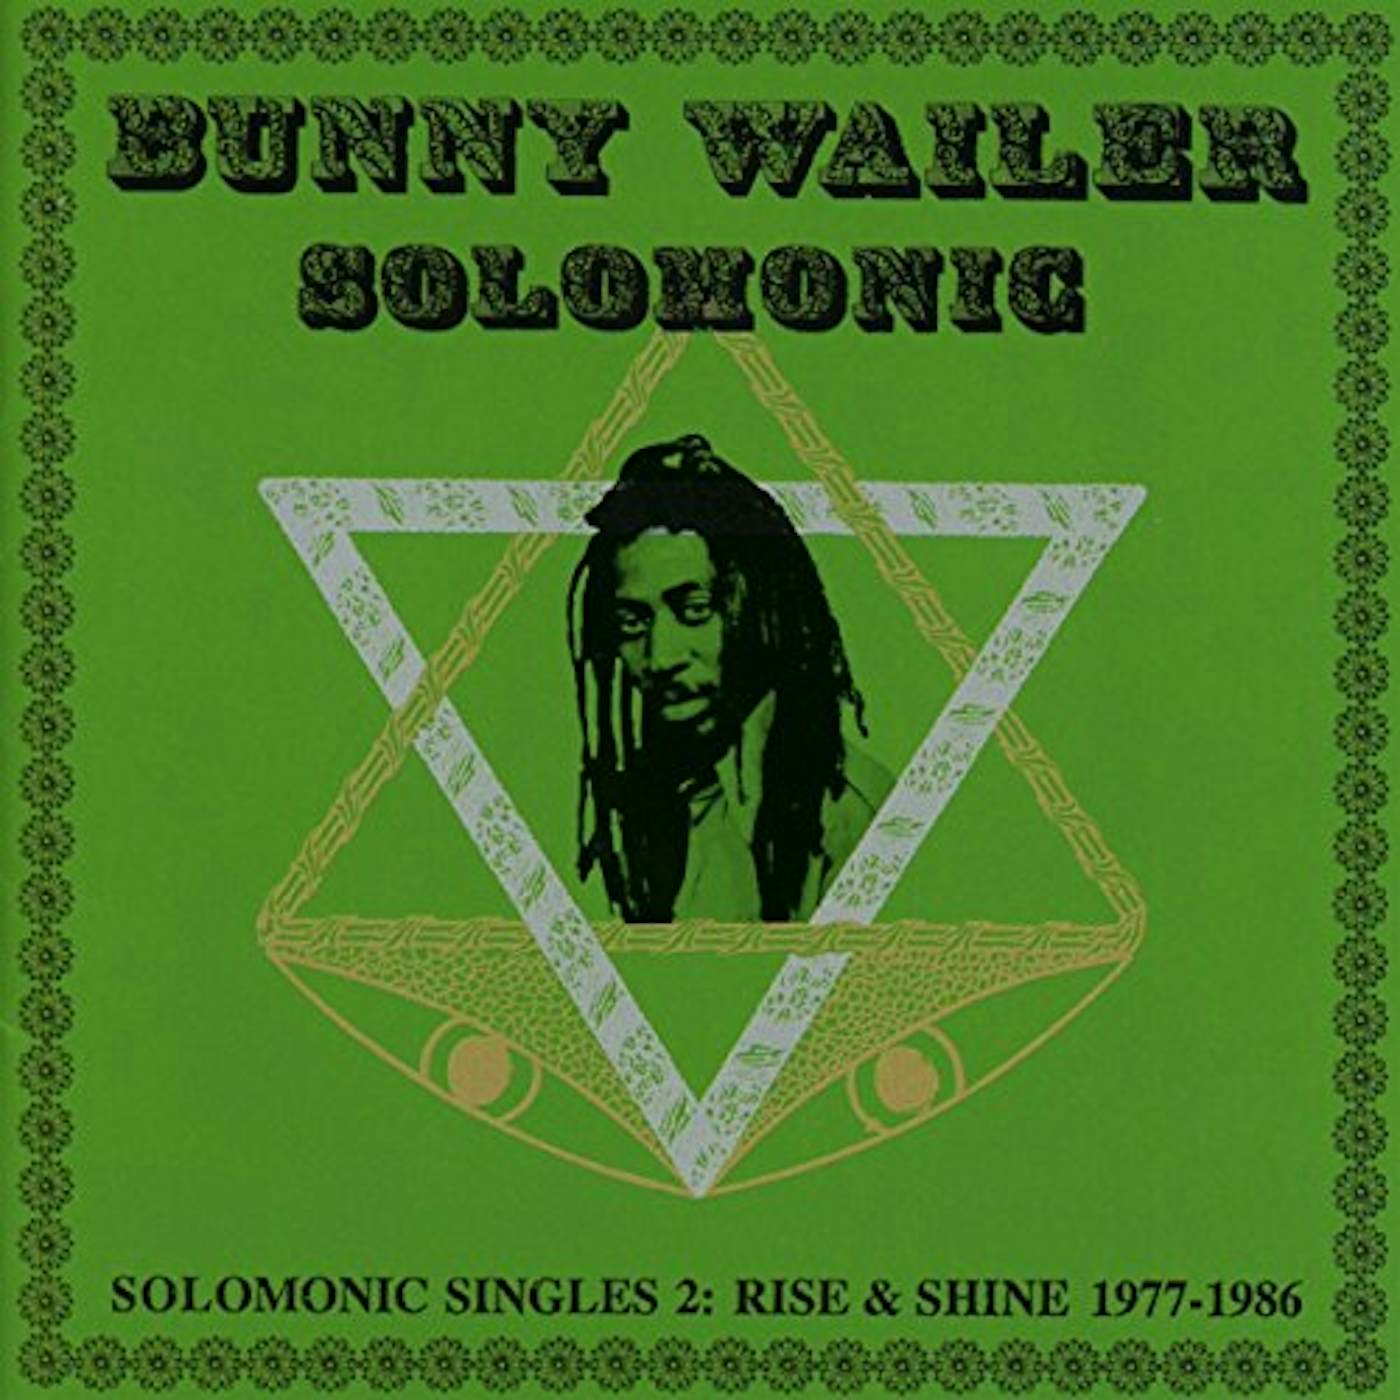 Bunny Wailer SOLOMONIC SINGLES 2: RISE & SHINE 1977-1986 CD